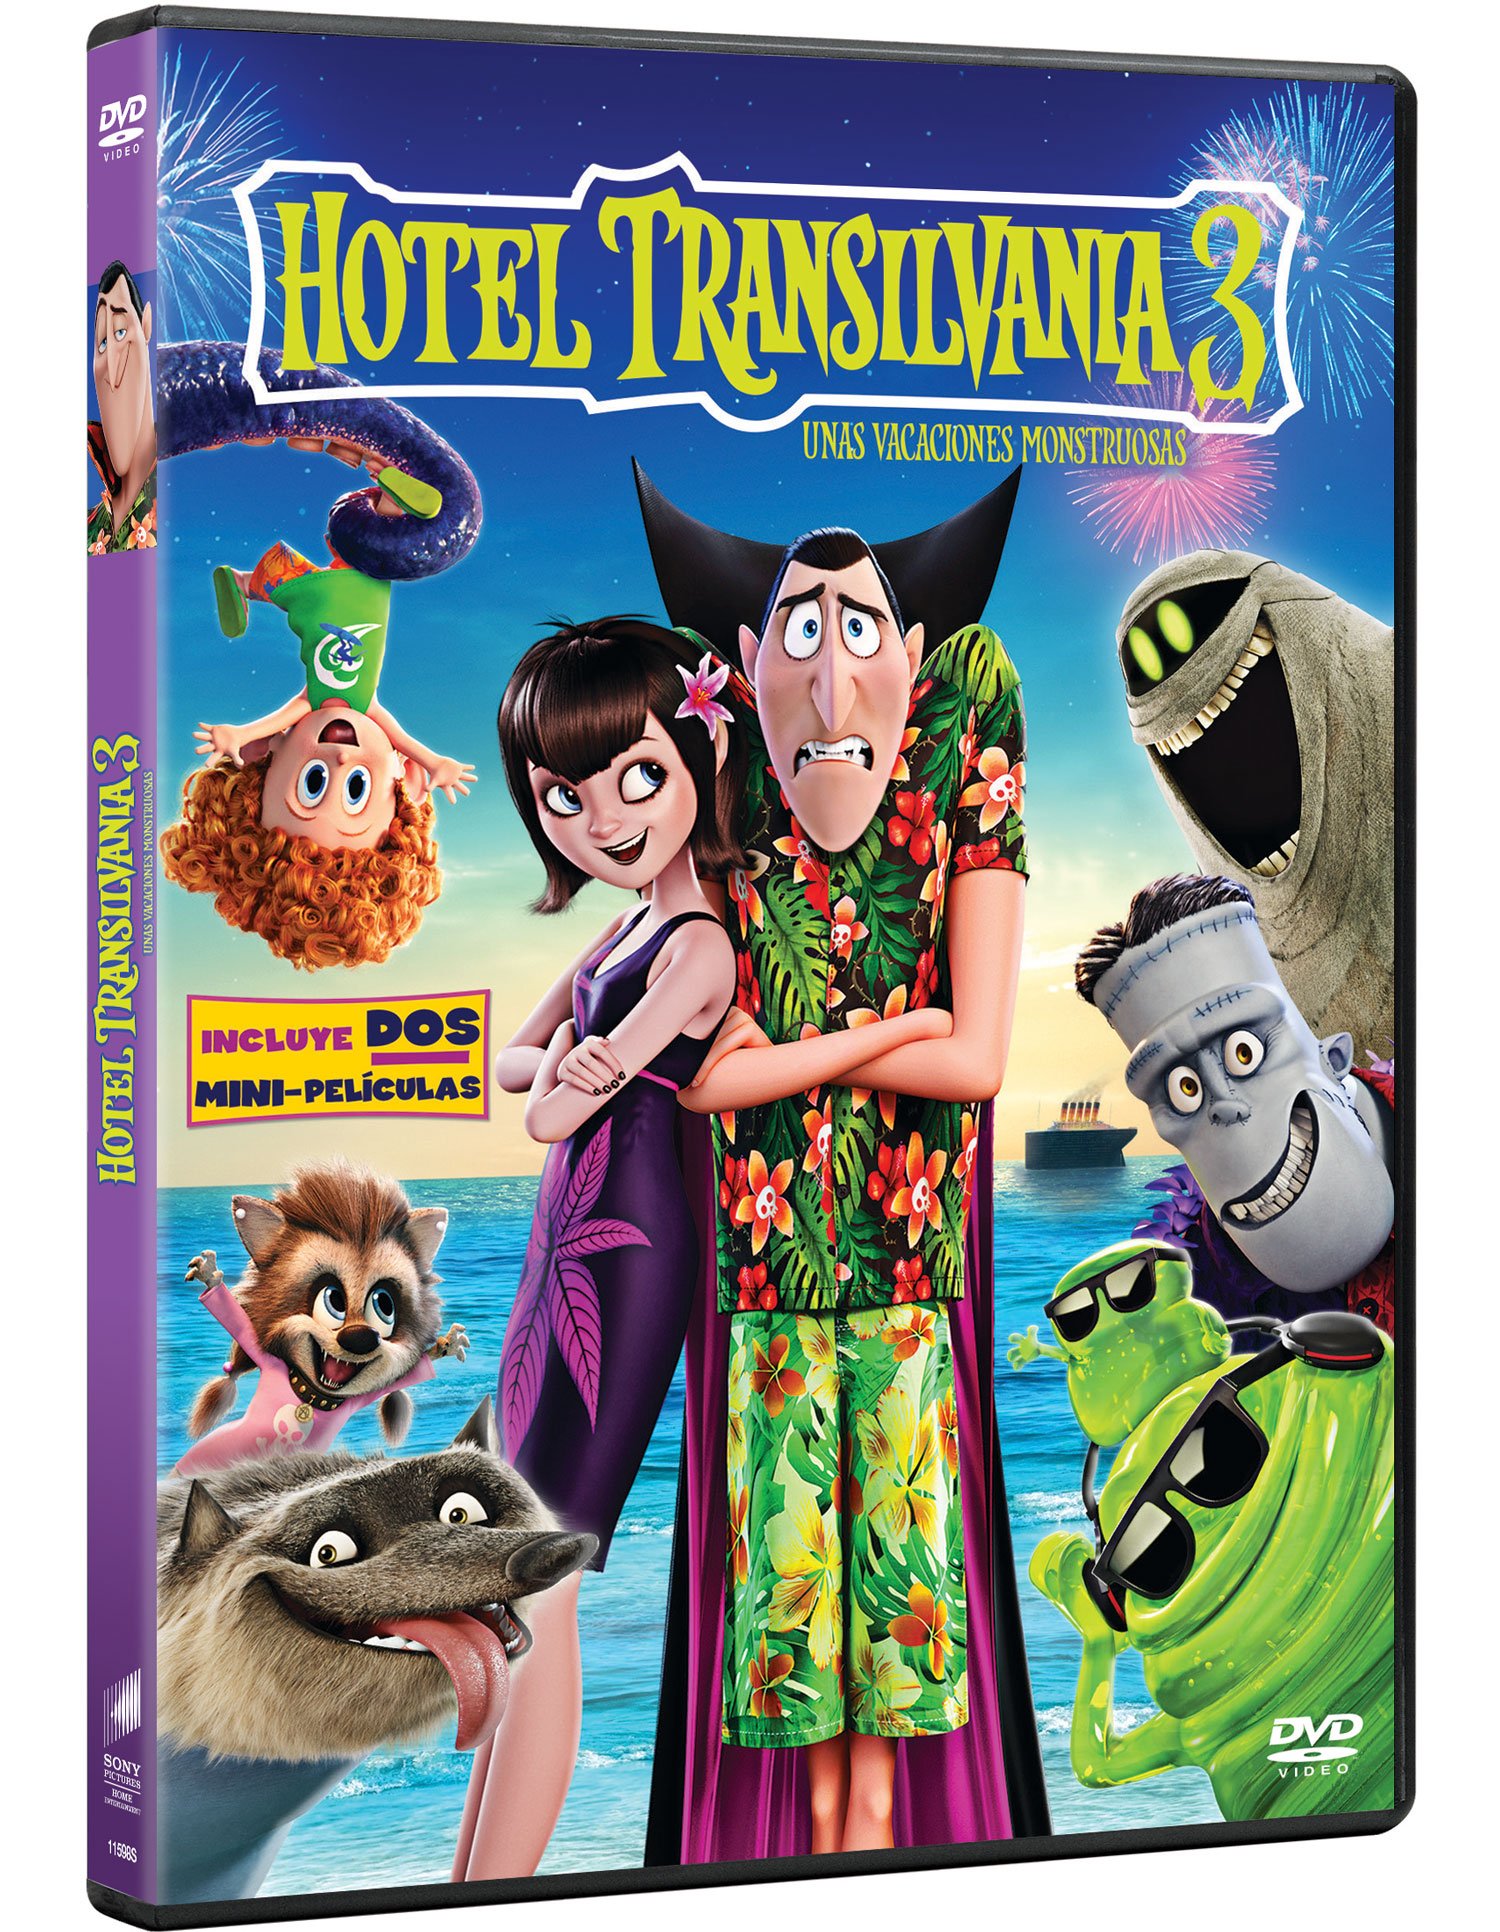 'Hotel Transilvania 3' Dvd